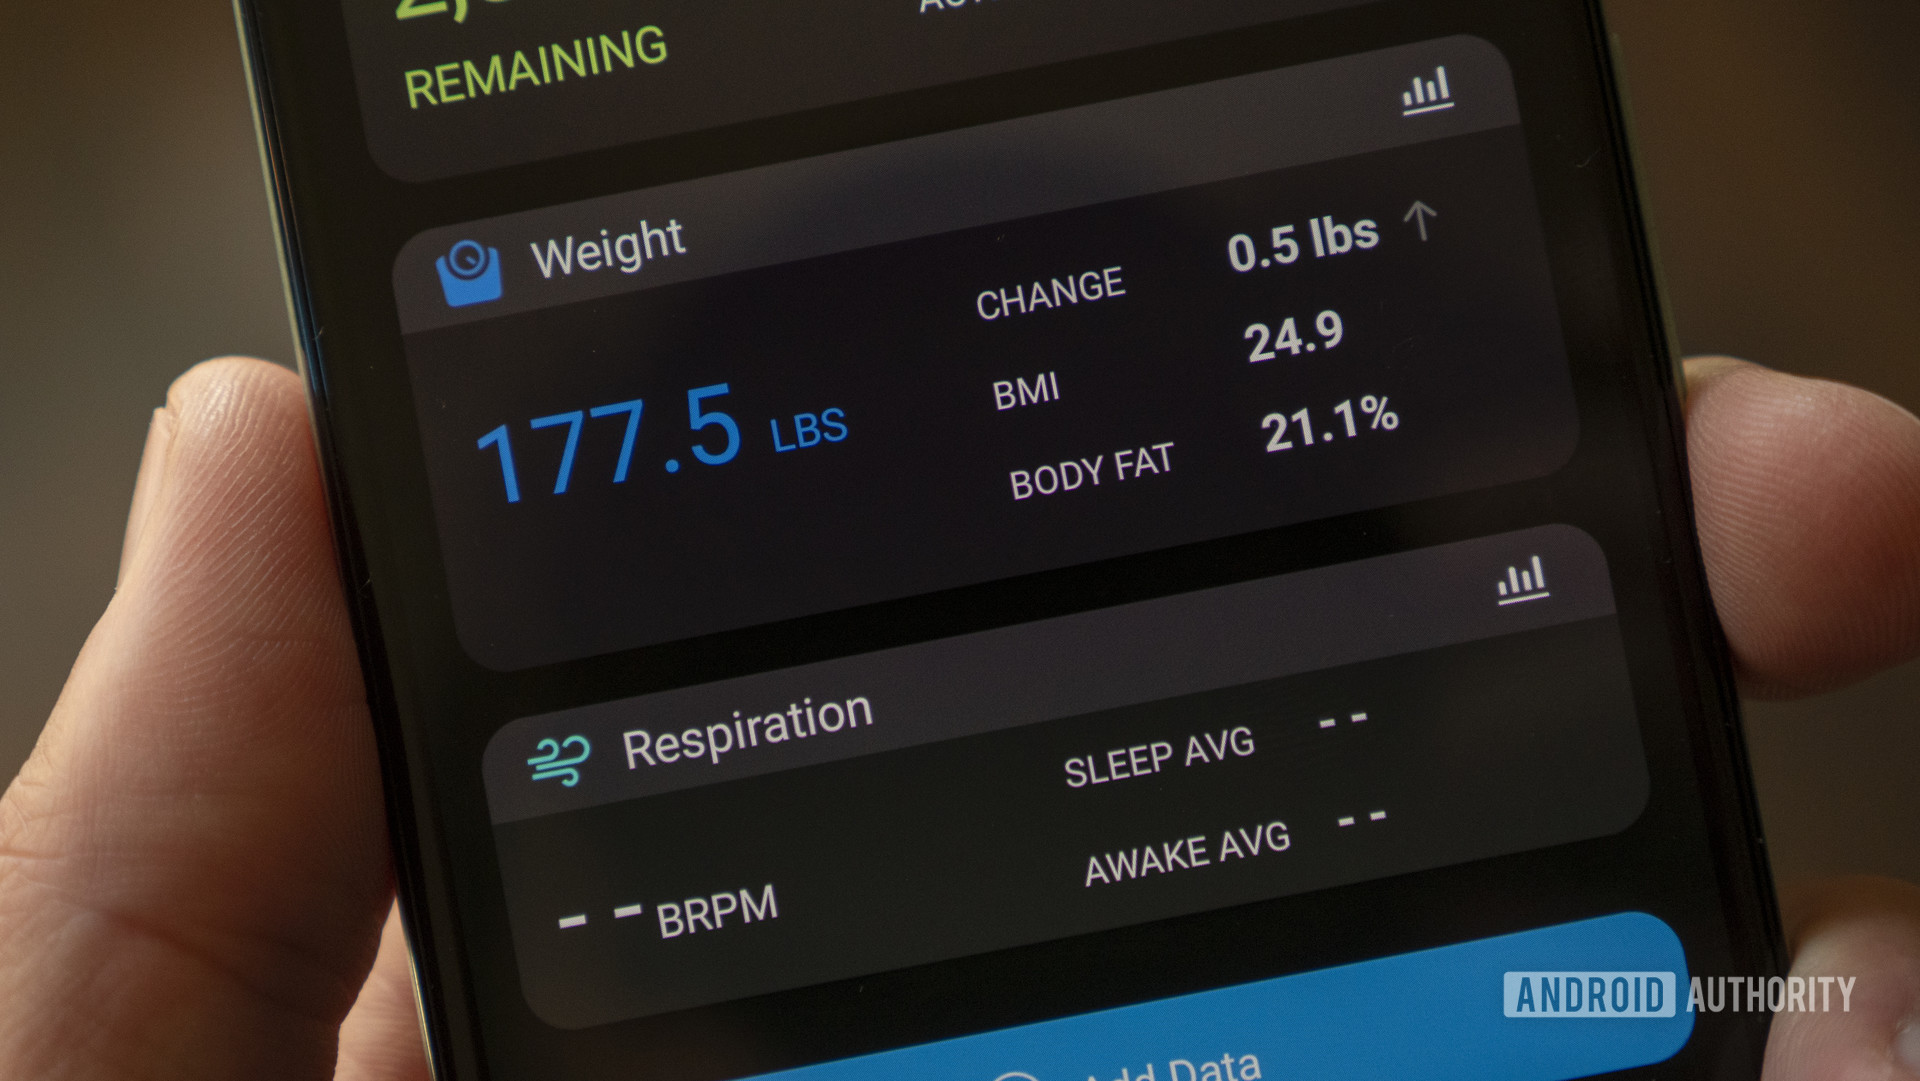 garmin index s2 smart scale review garmin connect weight widget home screen